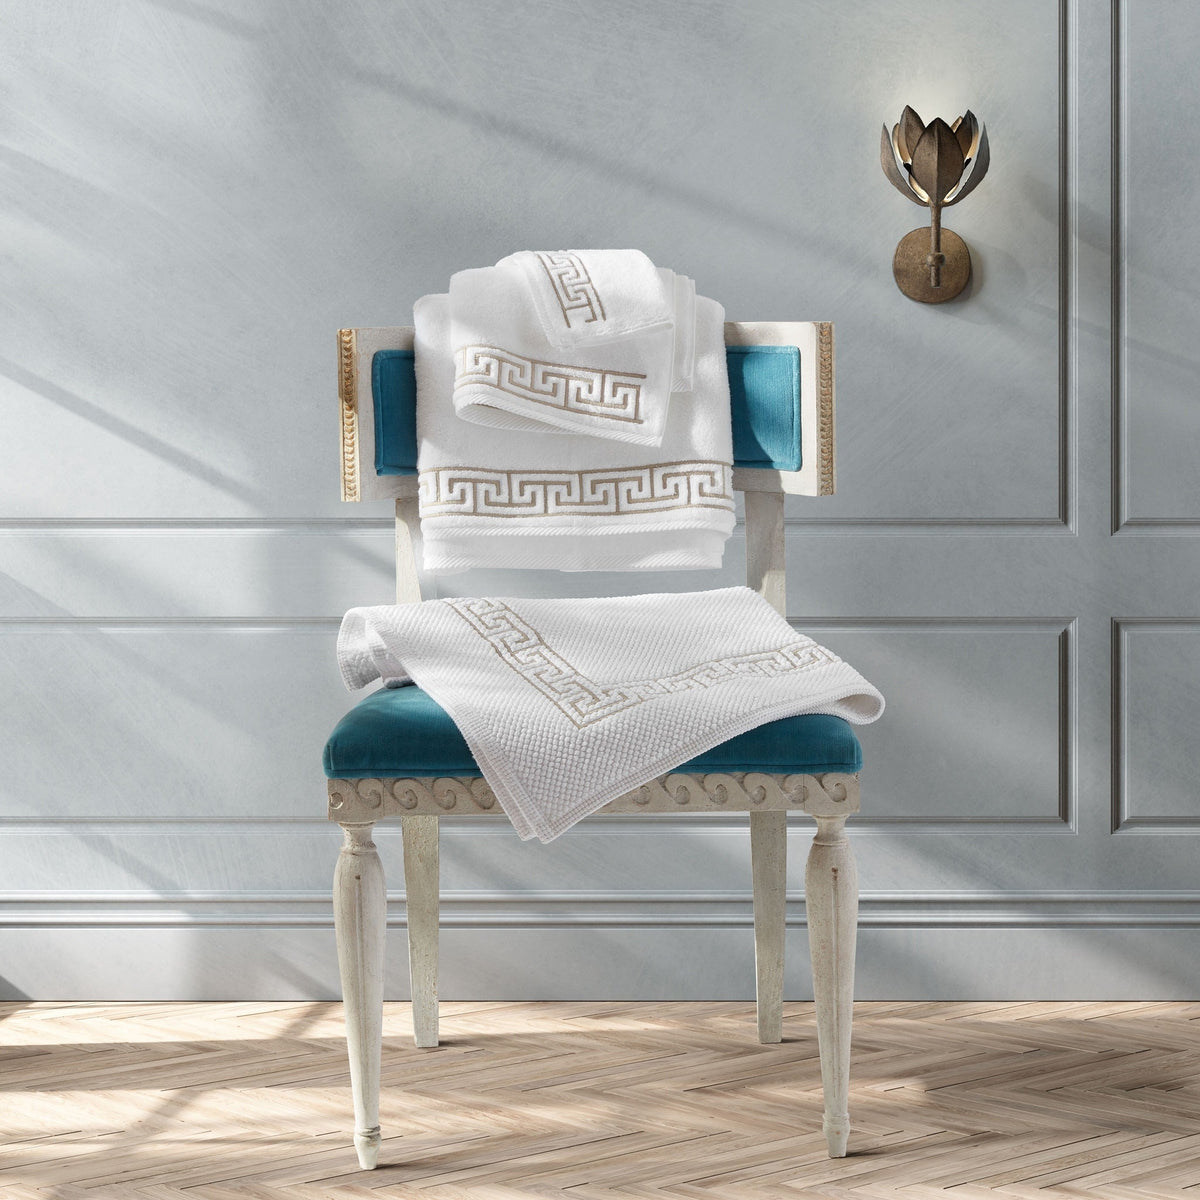 Lifestyle of Matouk Adelphi Bath Towels on Chair